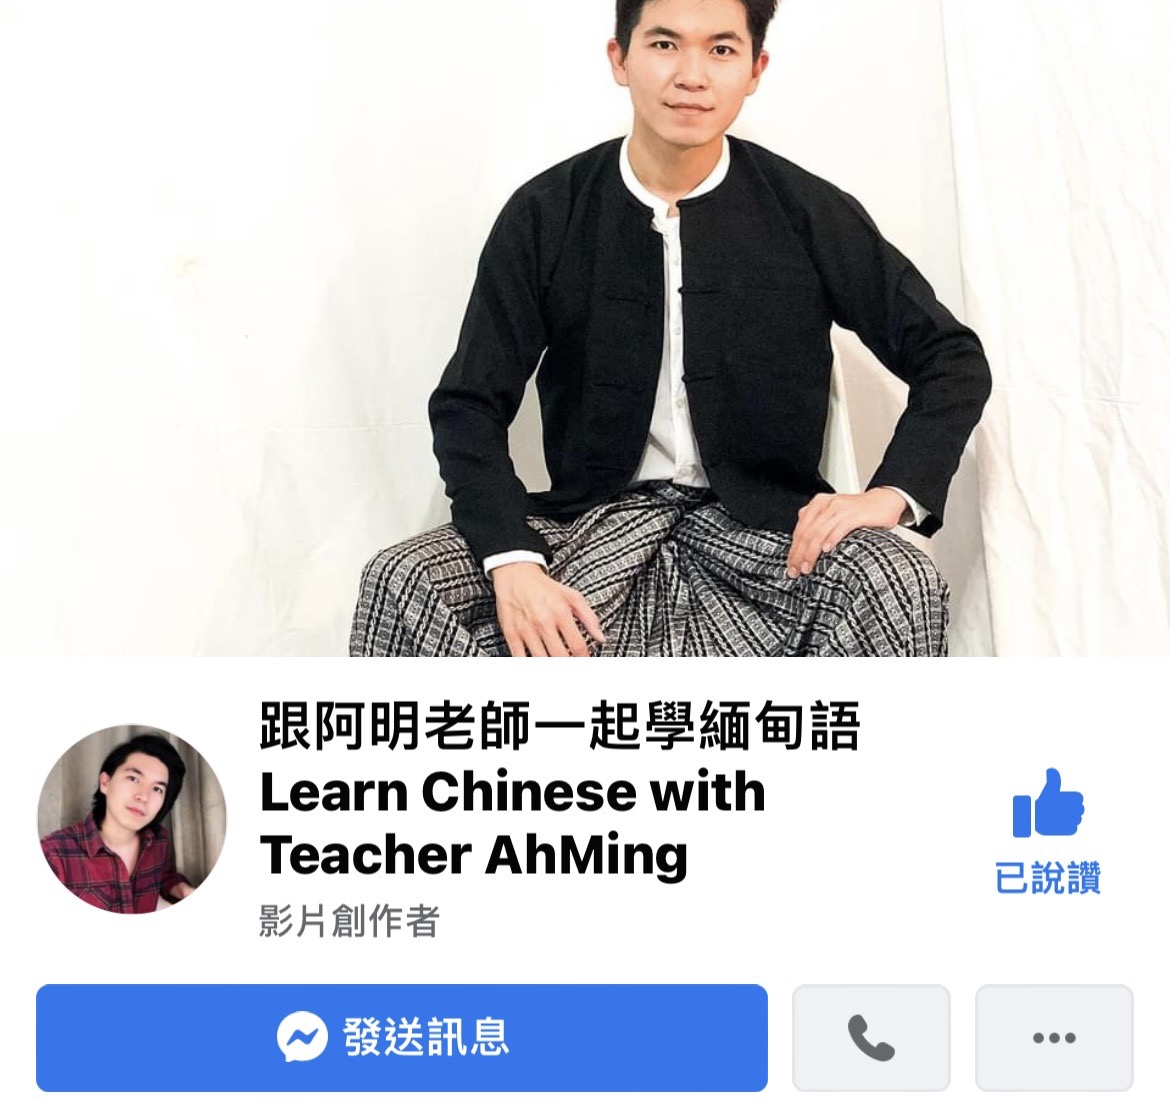 Semua orang dipersilakan untuk belajar bahasa Burma bersama Chen Qiming. Gambar: Diambil dari Facebook